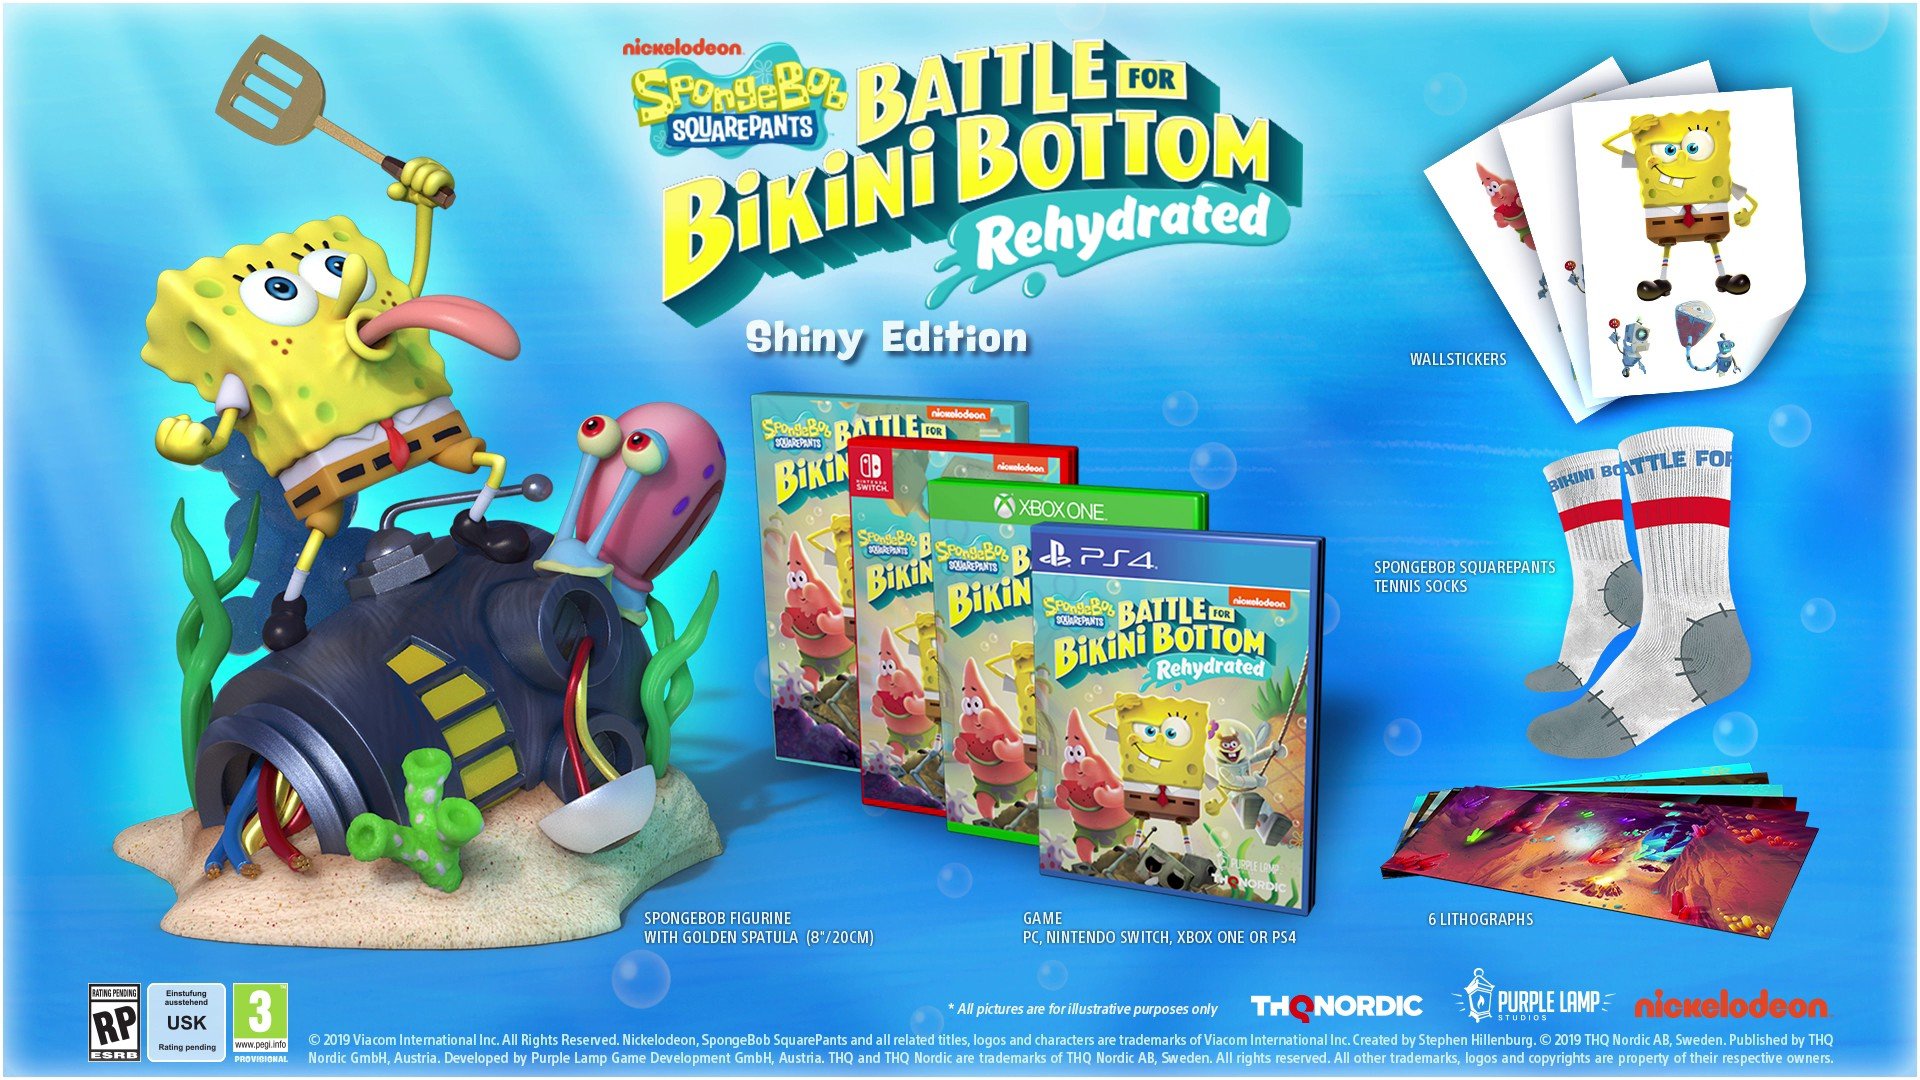 Double Squarepants Games Spongebob Video Bottom – Edition PS4 Jump Rehydrated Bikini Battle – for F.U.N.